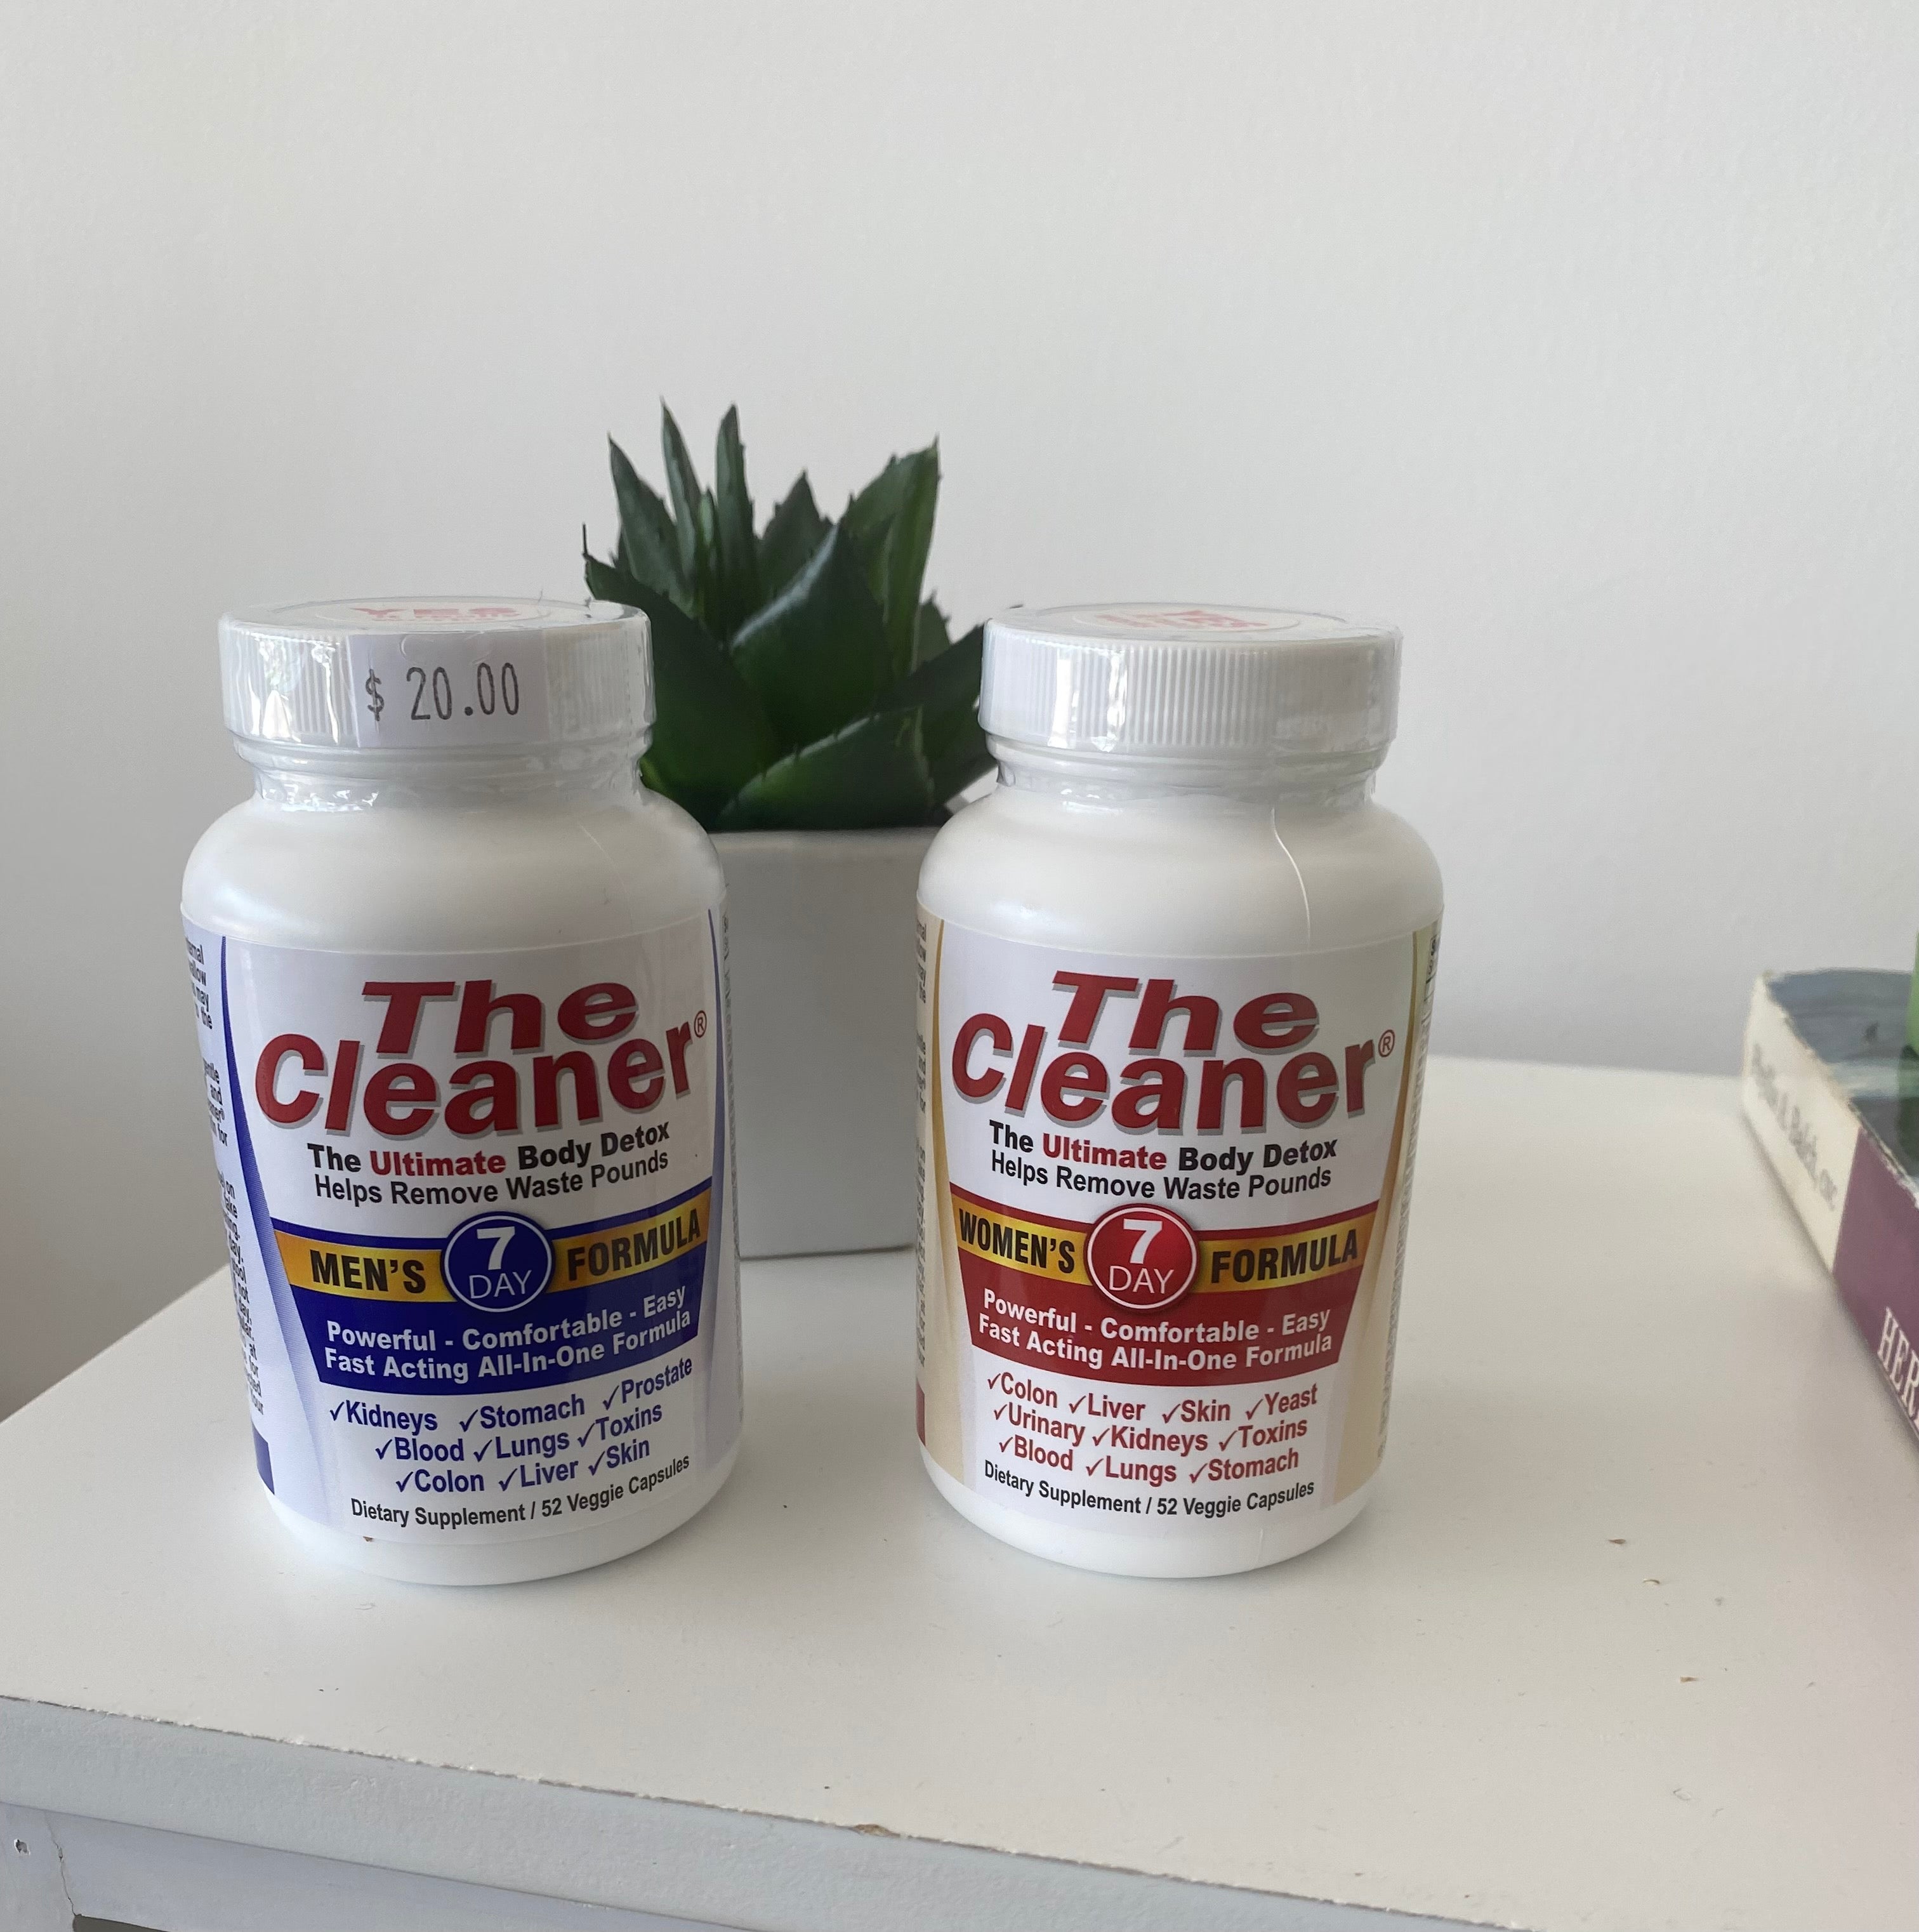 The Cleaner Body Detox Men's Formula, 7 Day - 52 capsules